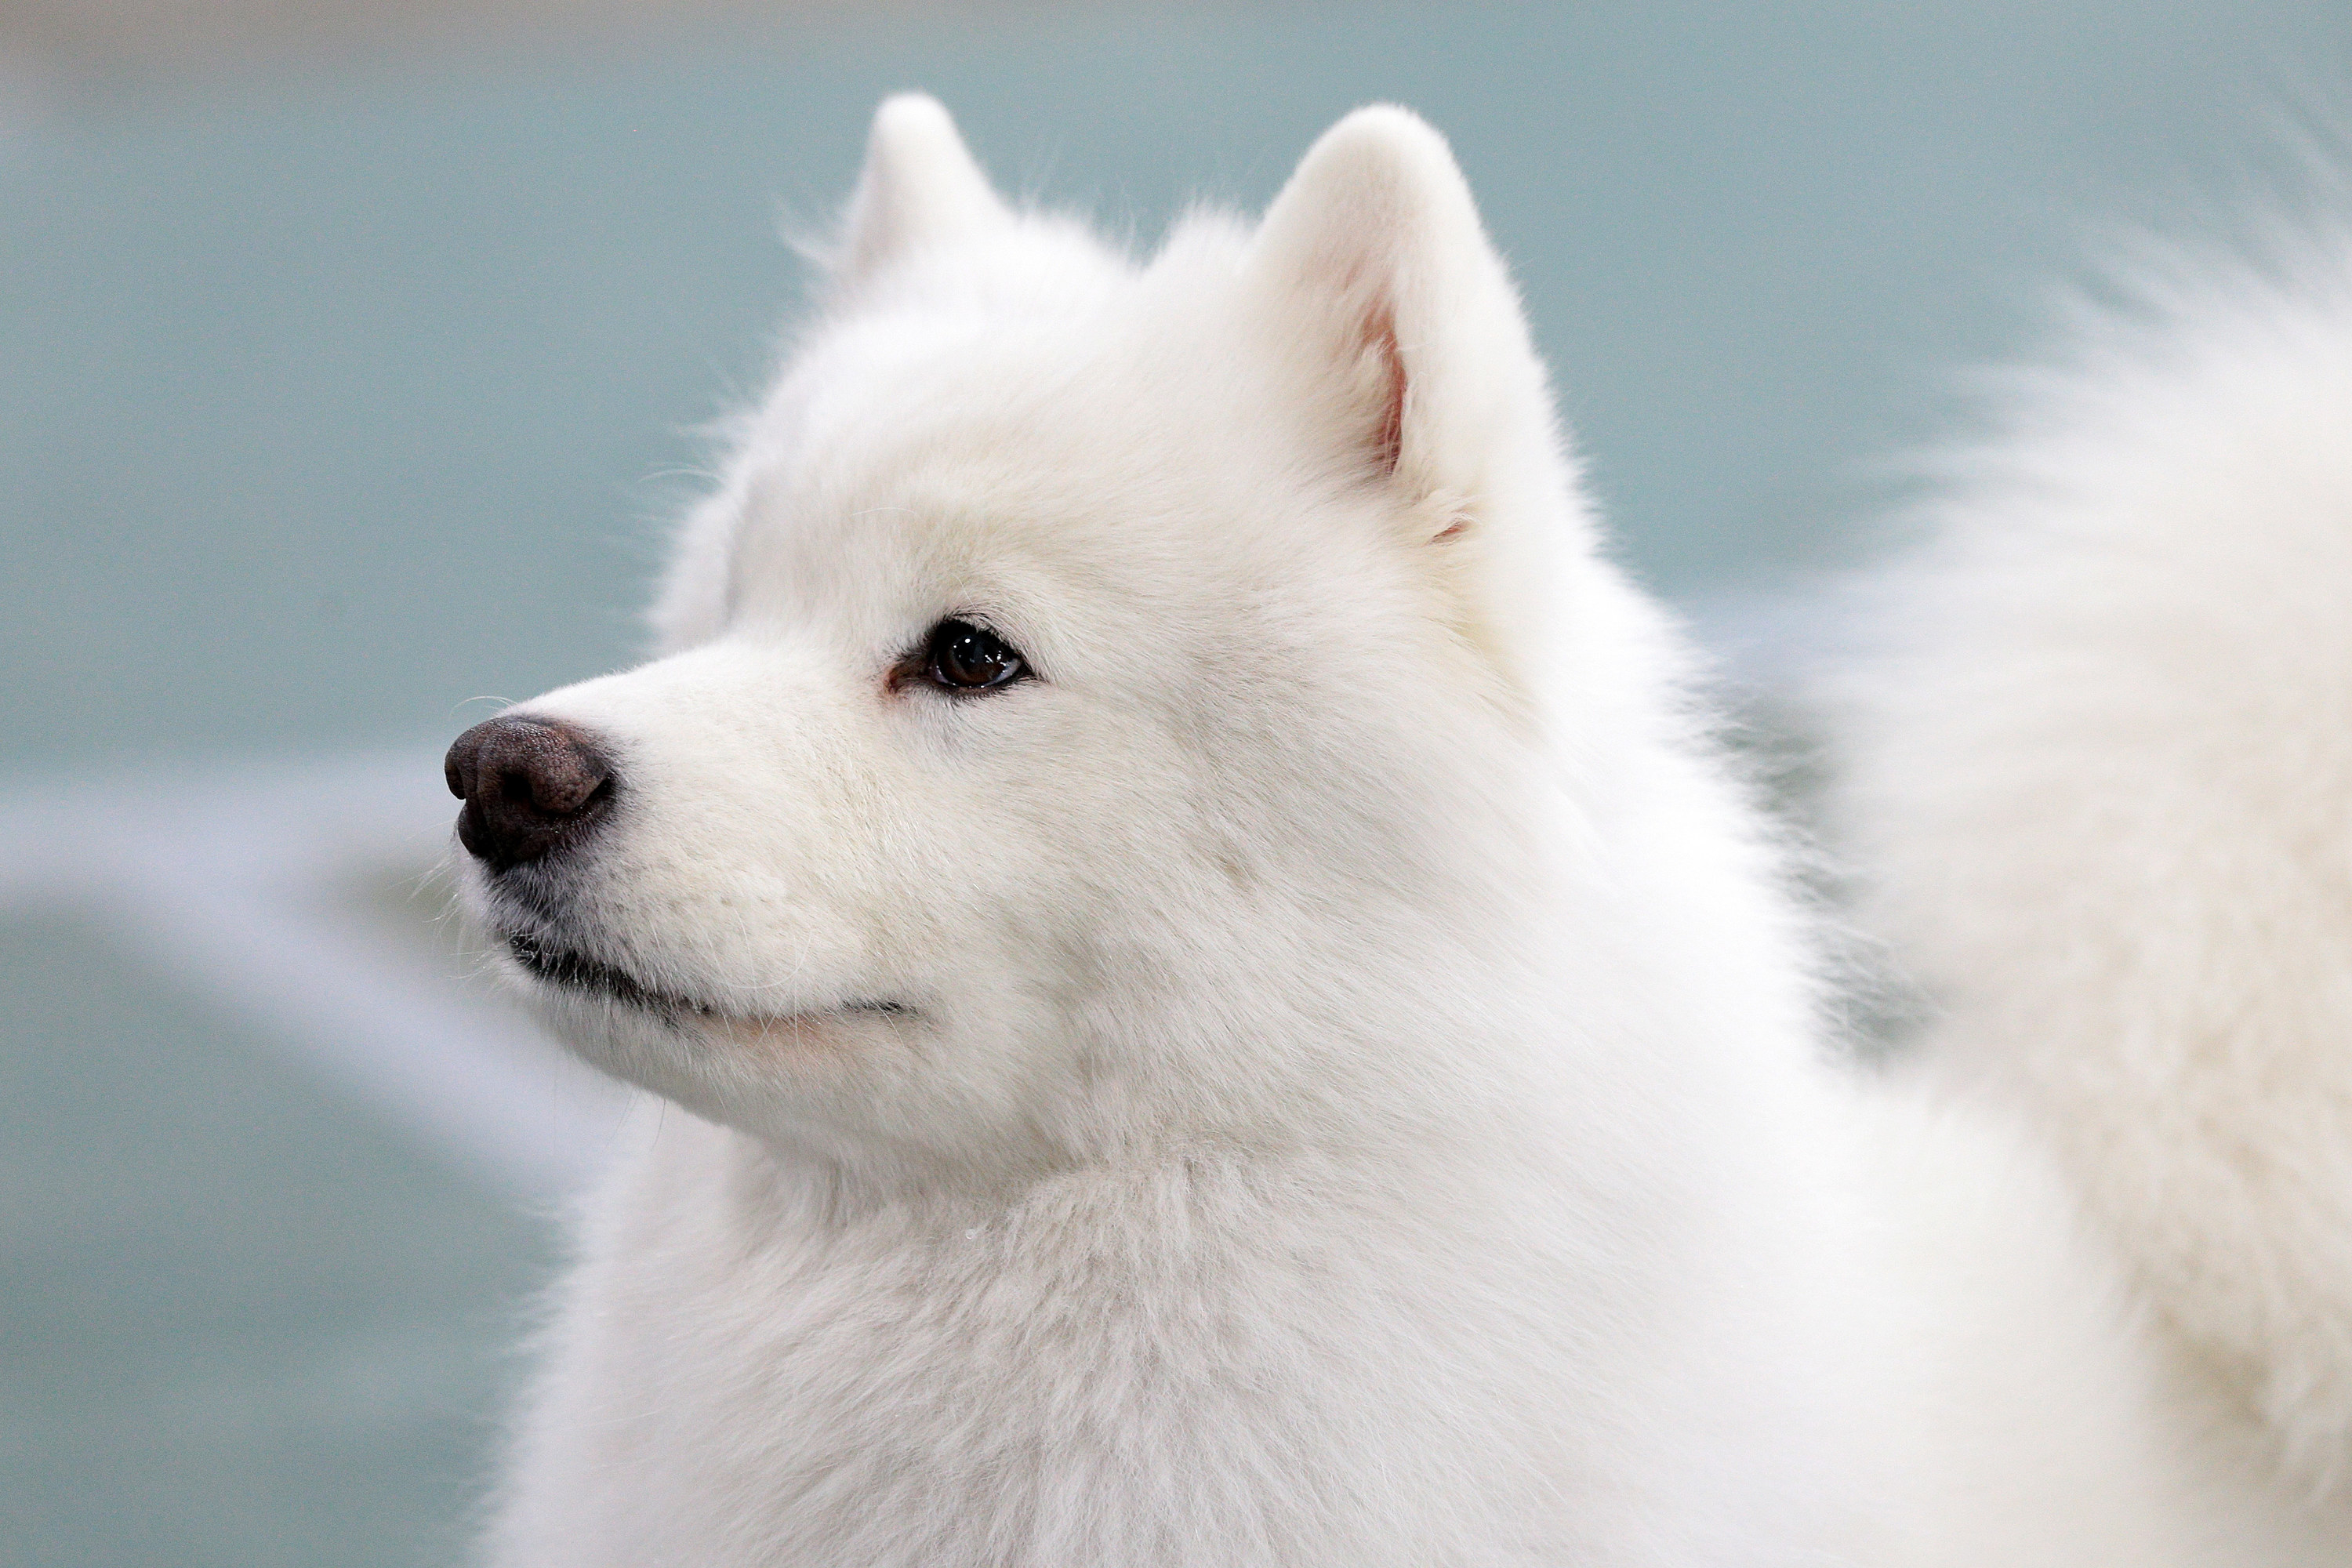 An American Eskimo during the Michigan Winter Dog Classic show